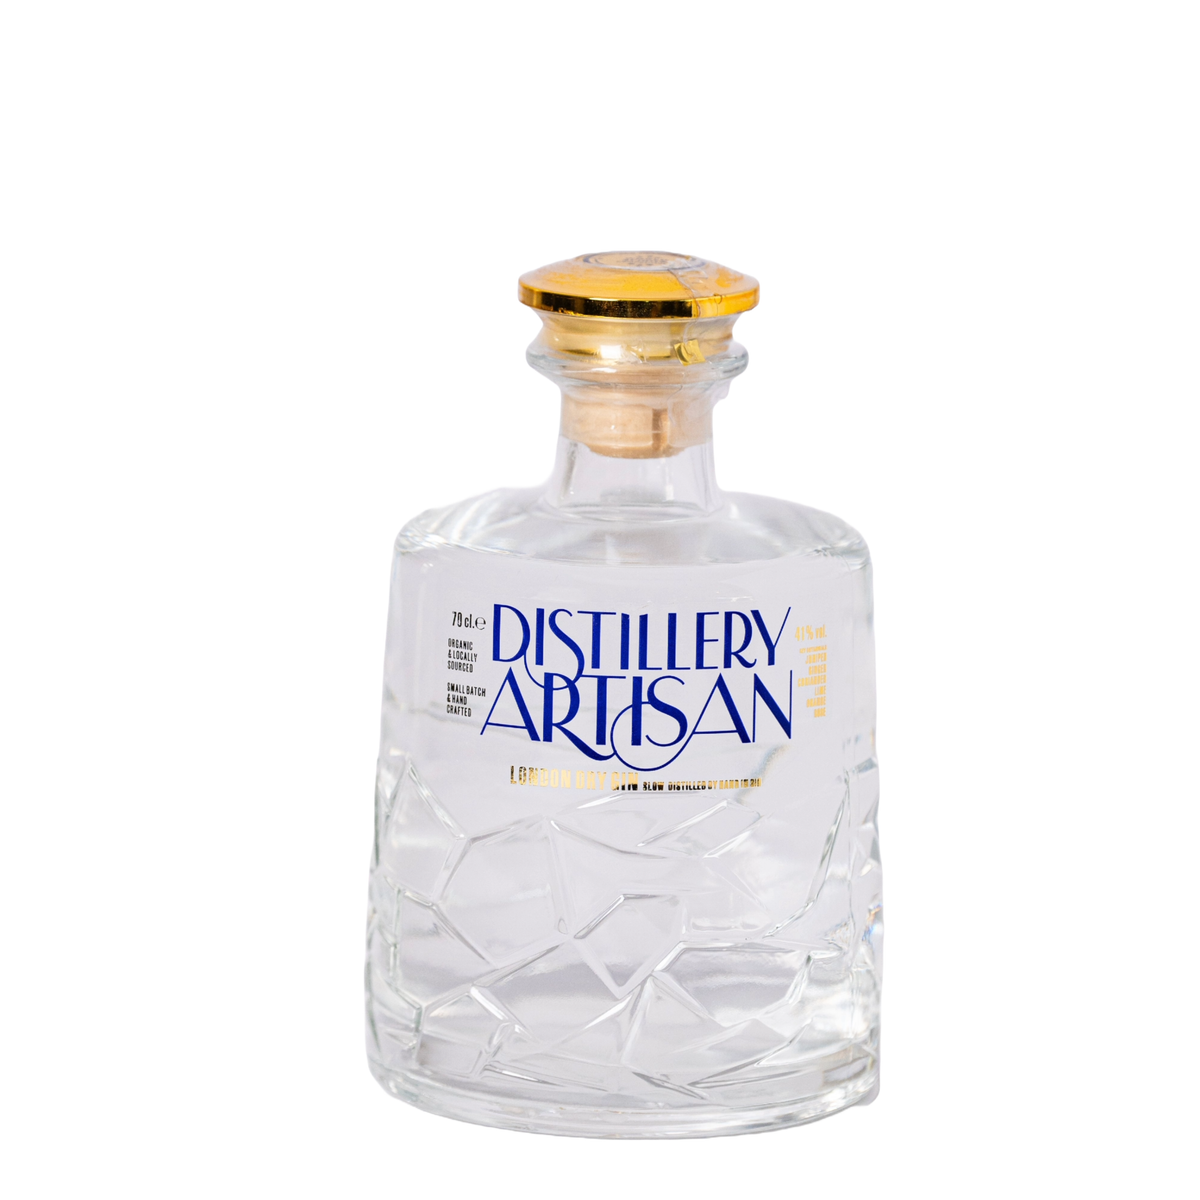 vol. - 70 41% Dry Artisan Artisan London Gin cl. – Distillery